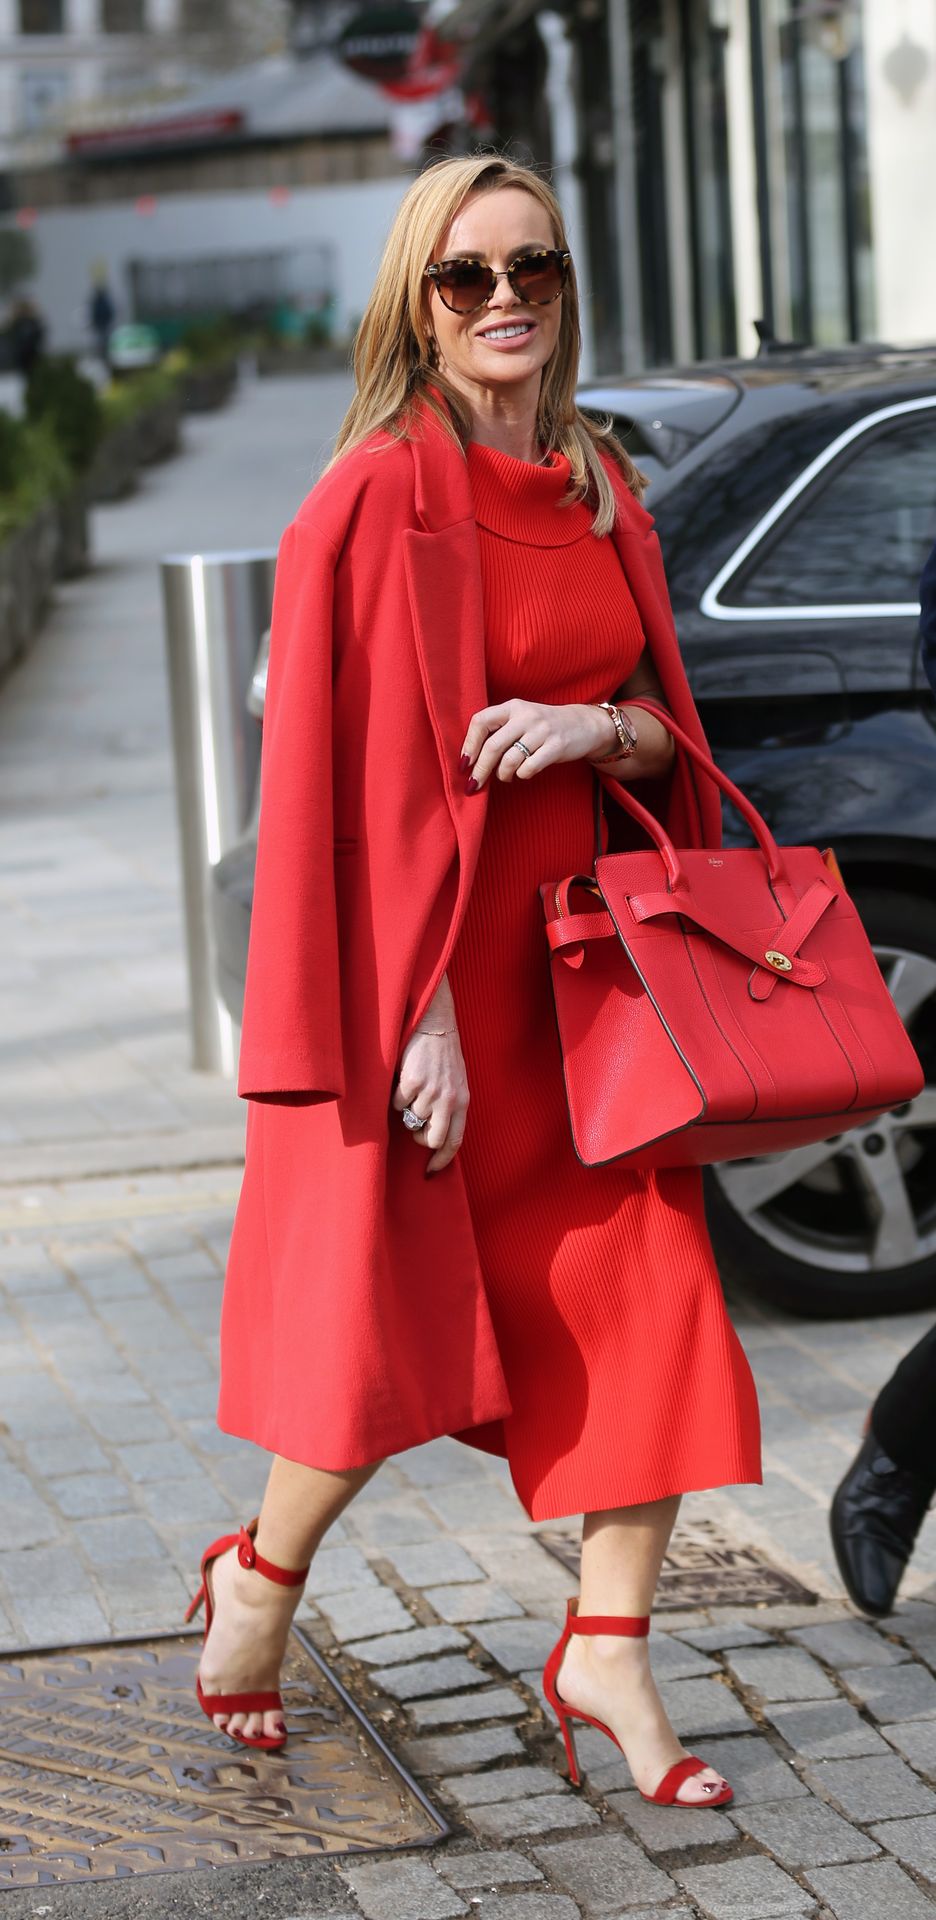 Amanda Holden Looks Hot in Red at Heart Radio Studios (42 Photos)